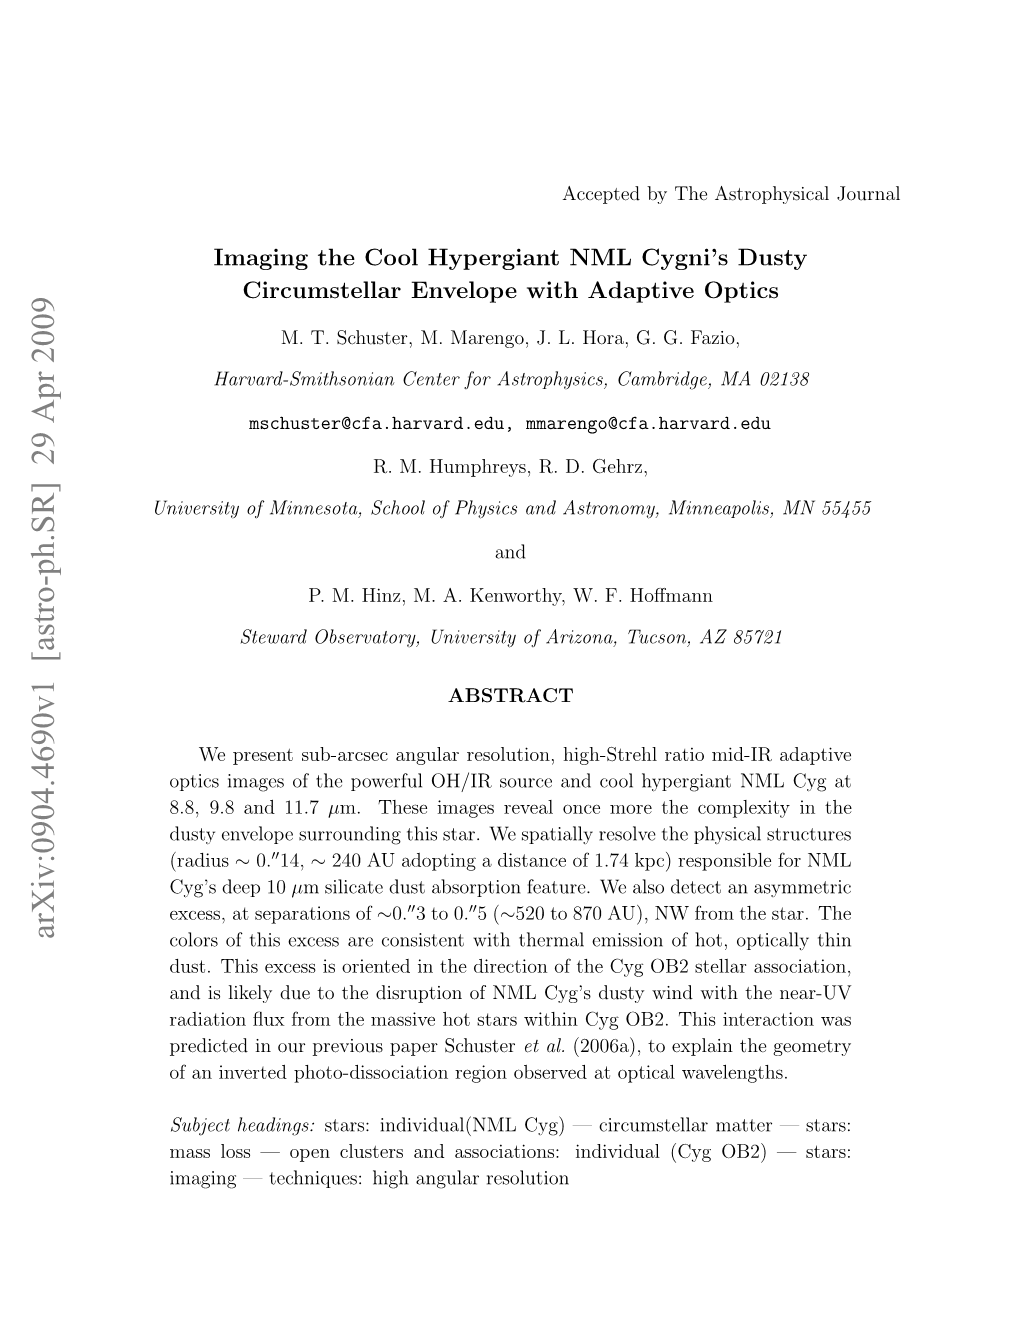 Imaging the Cool Hypergiant NML Cygni's Dusty Circumstellar Envelope with Adaptive Optics